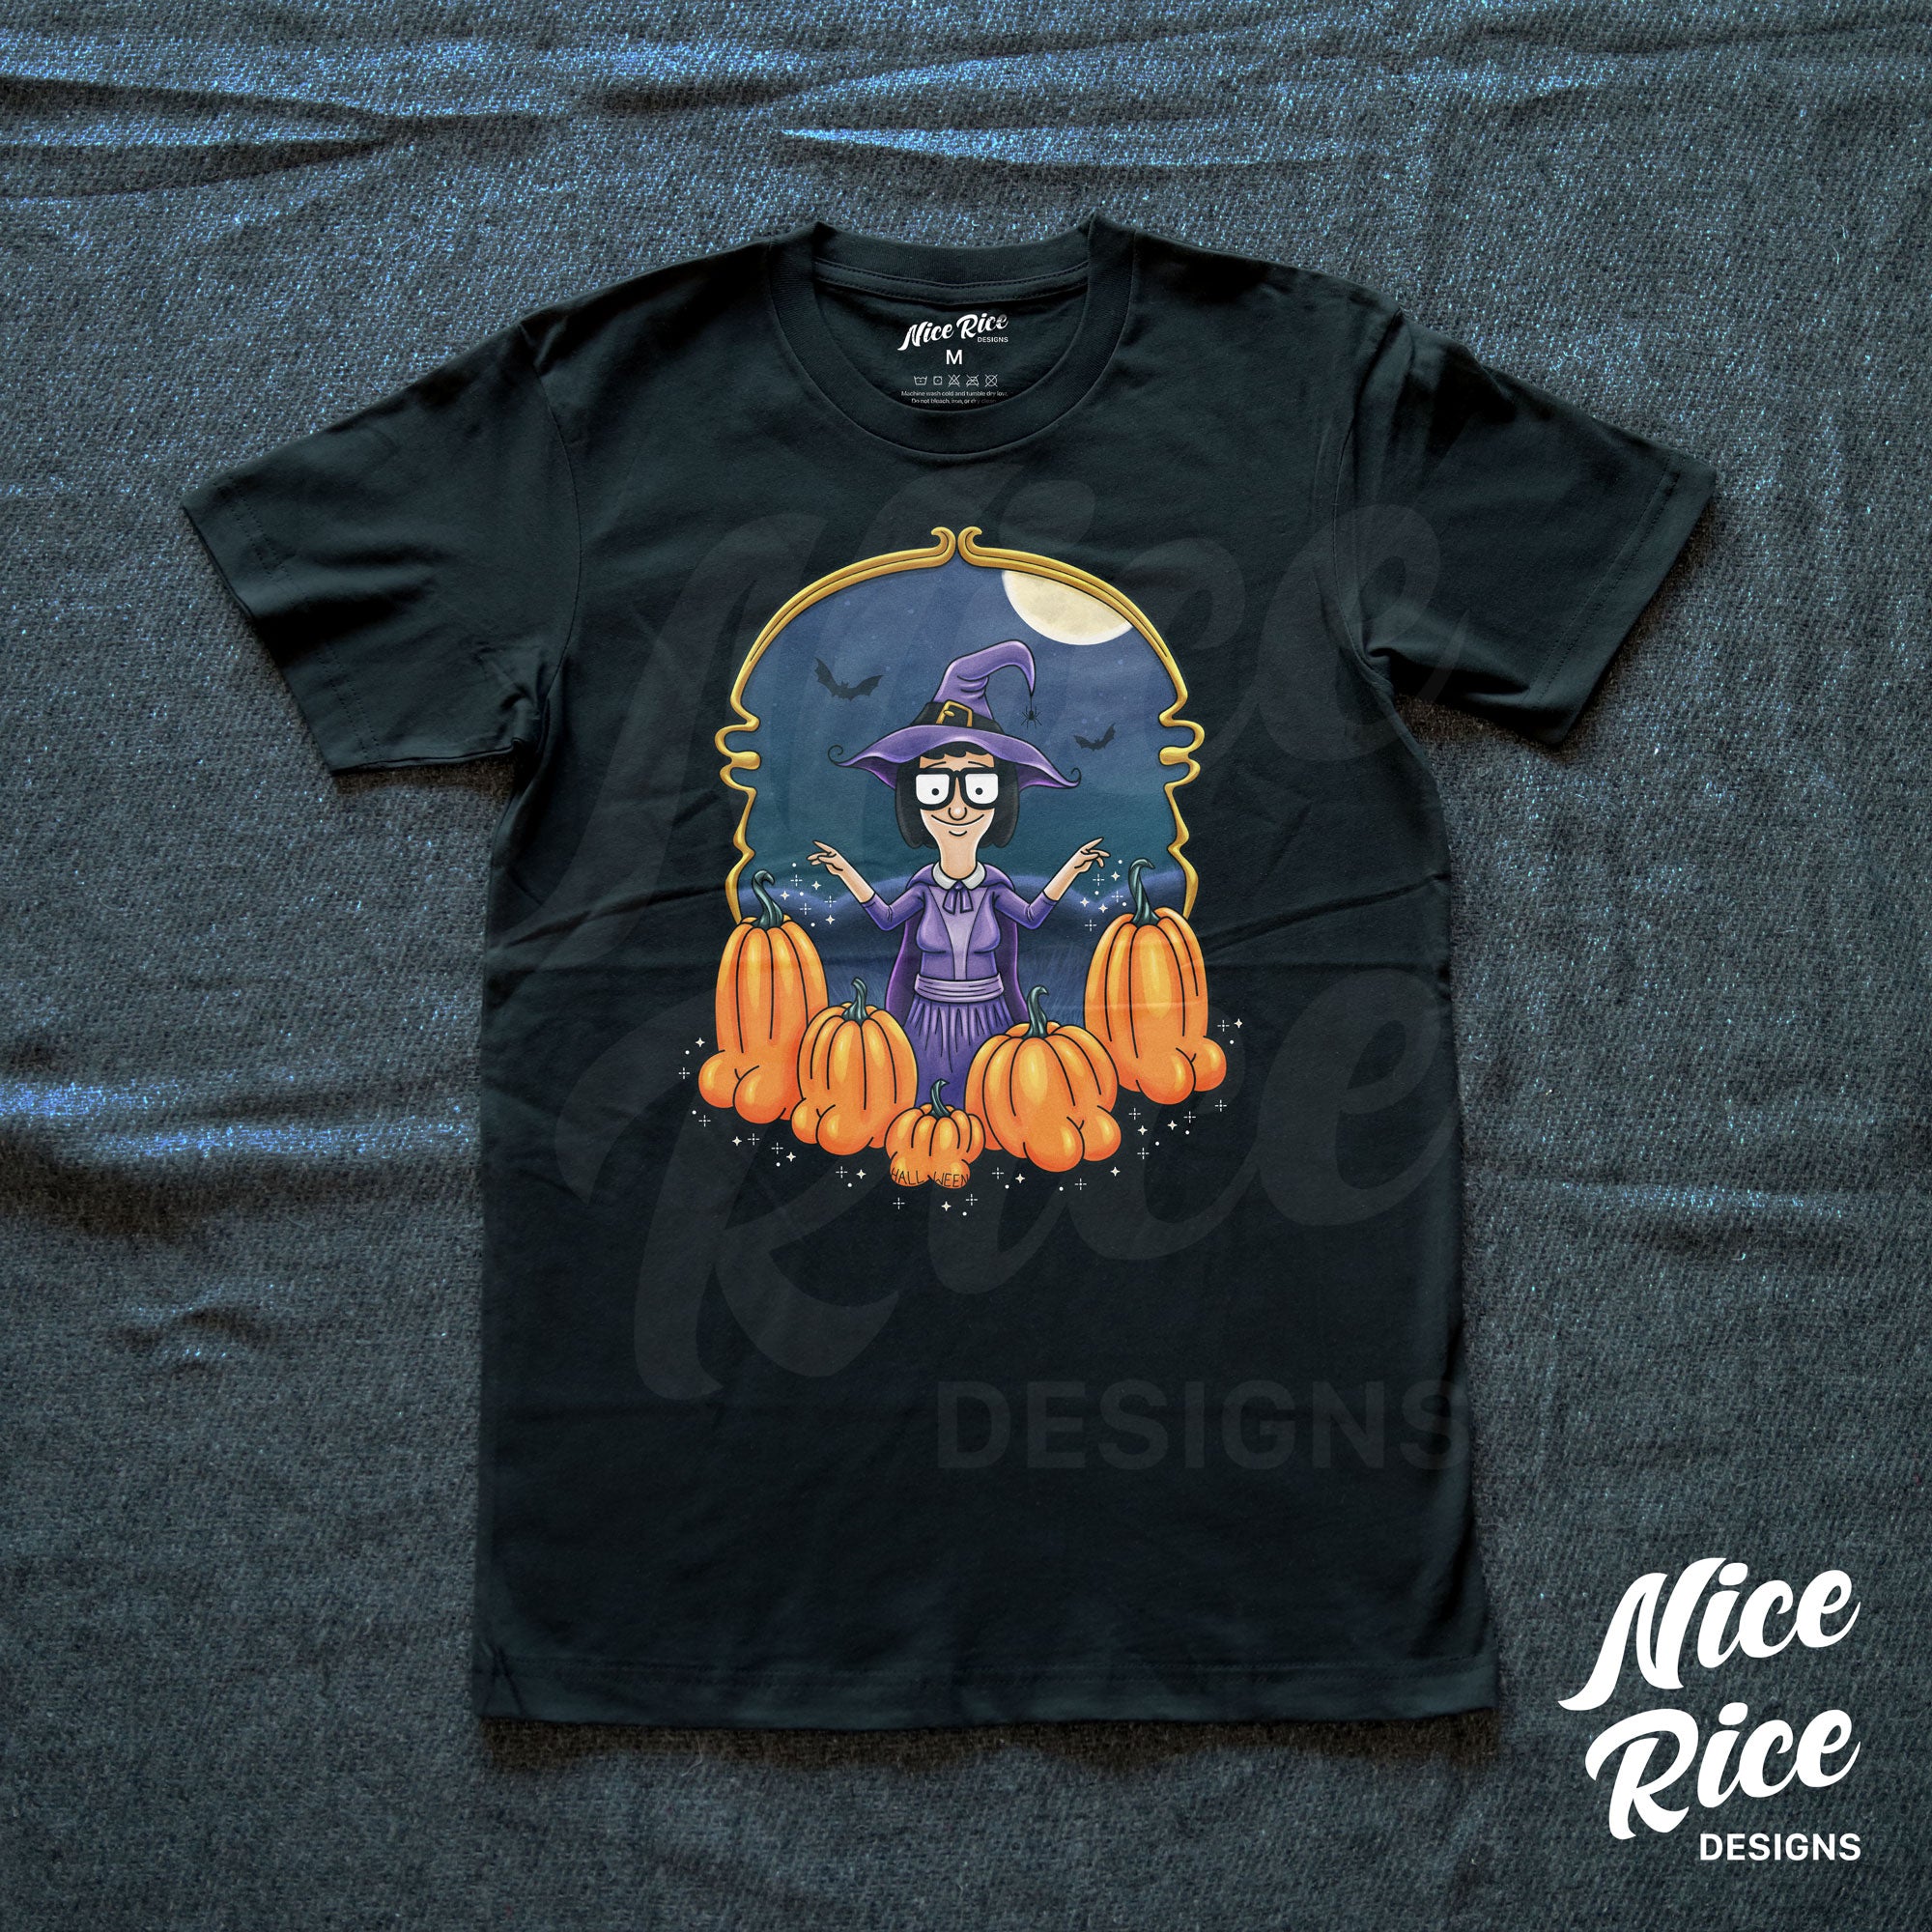 Pumpkin Spice Shirt by Nice Rice Designs